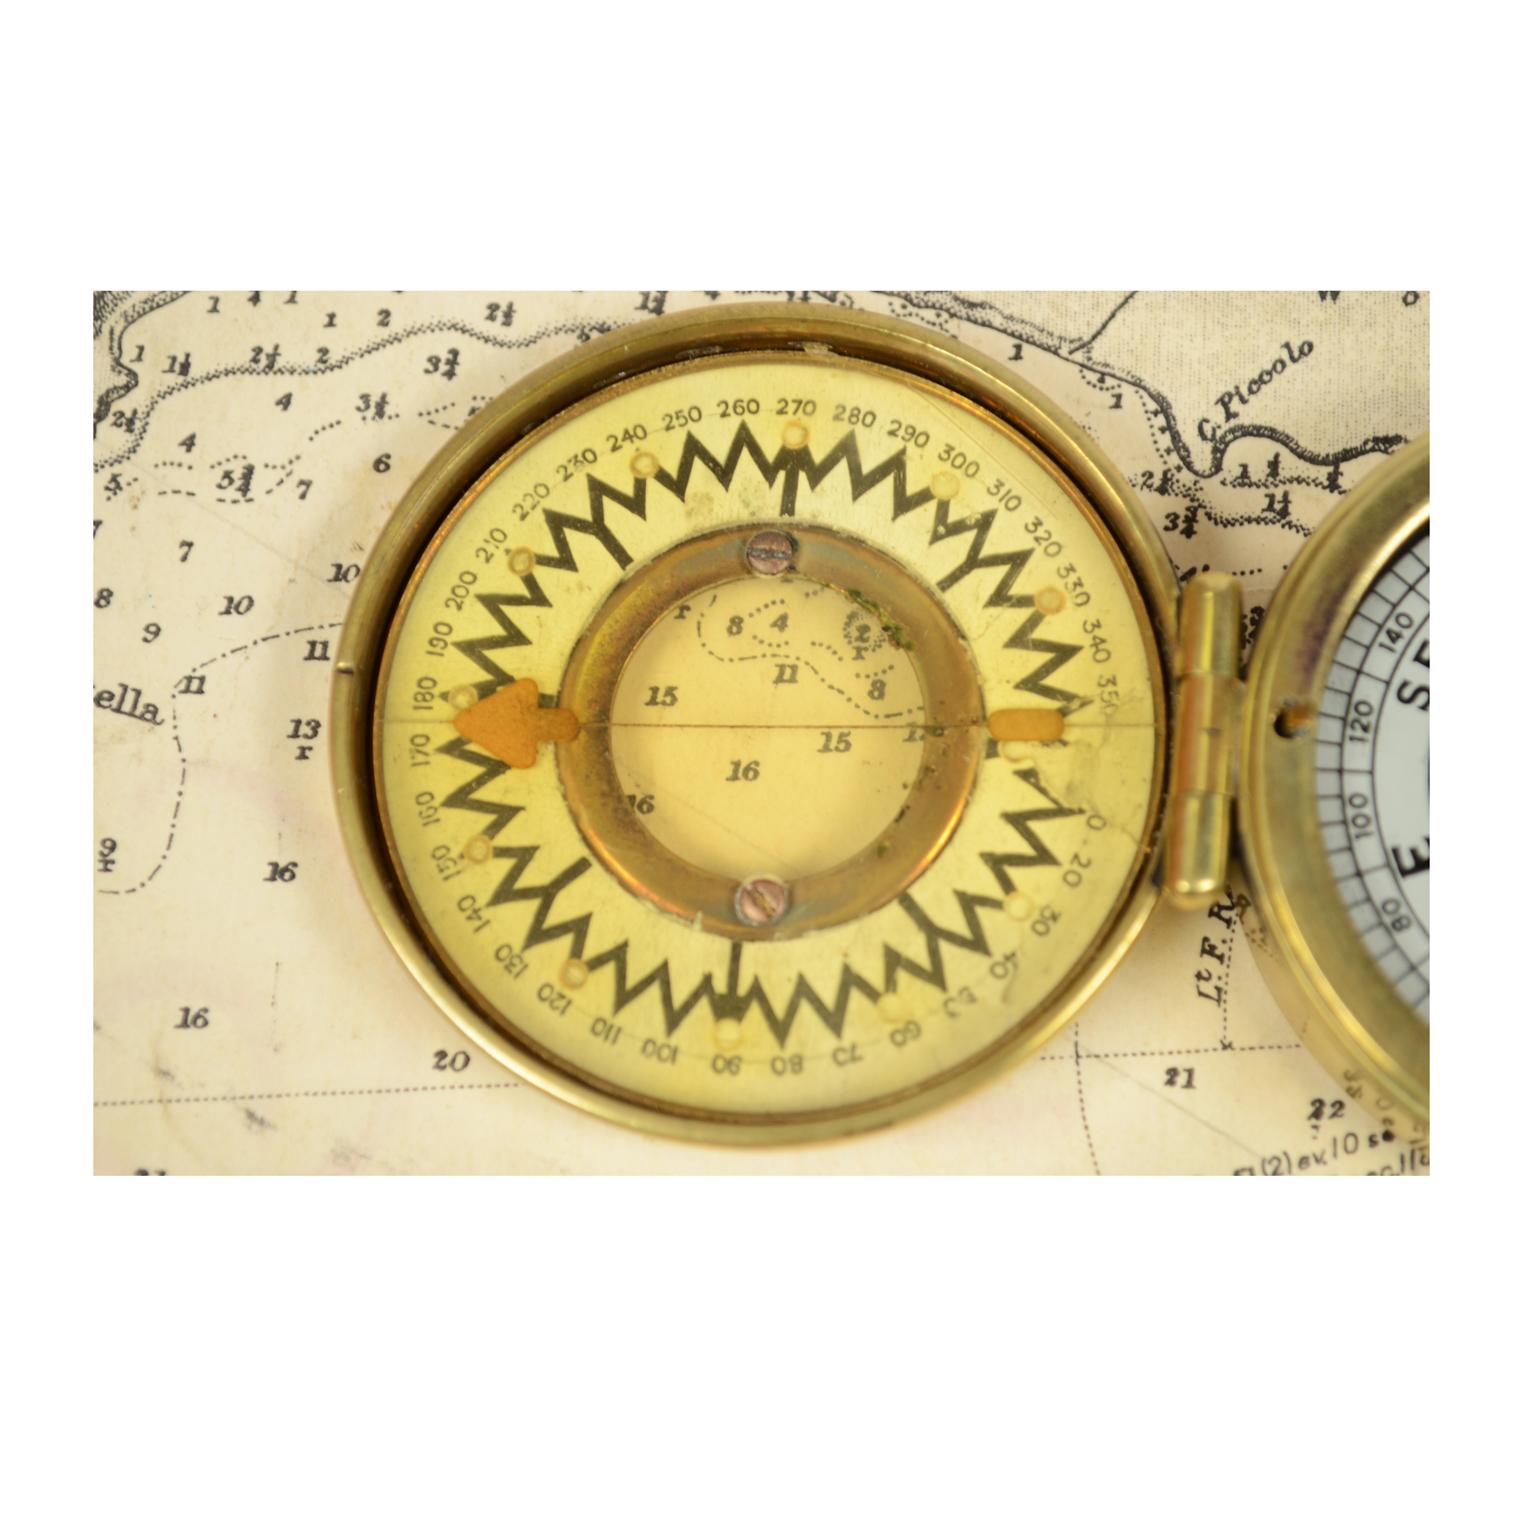 Brass Survey Compass the Magnapole 7